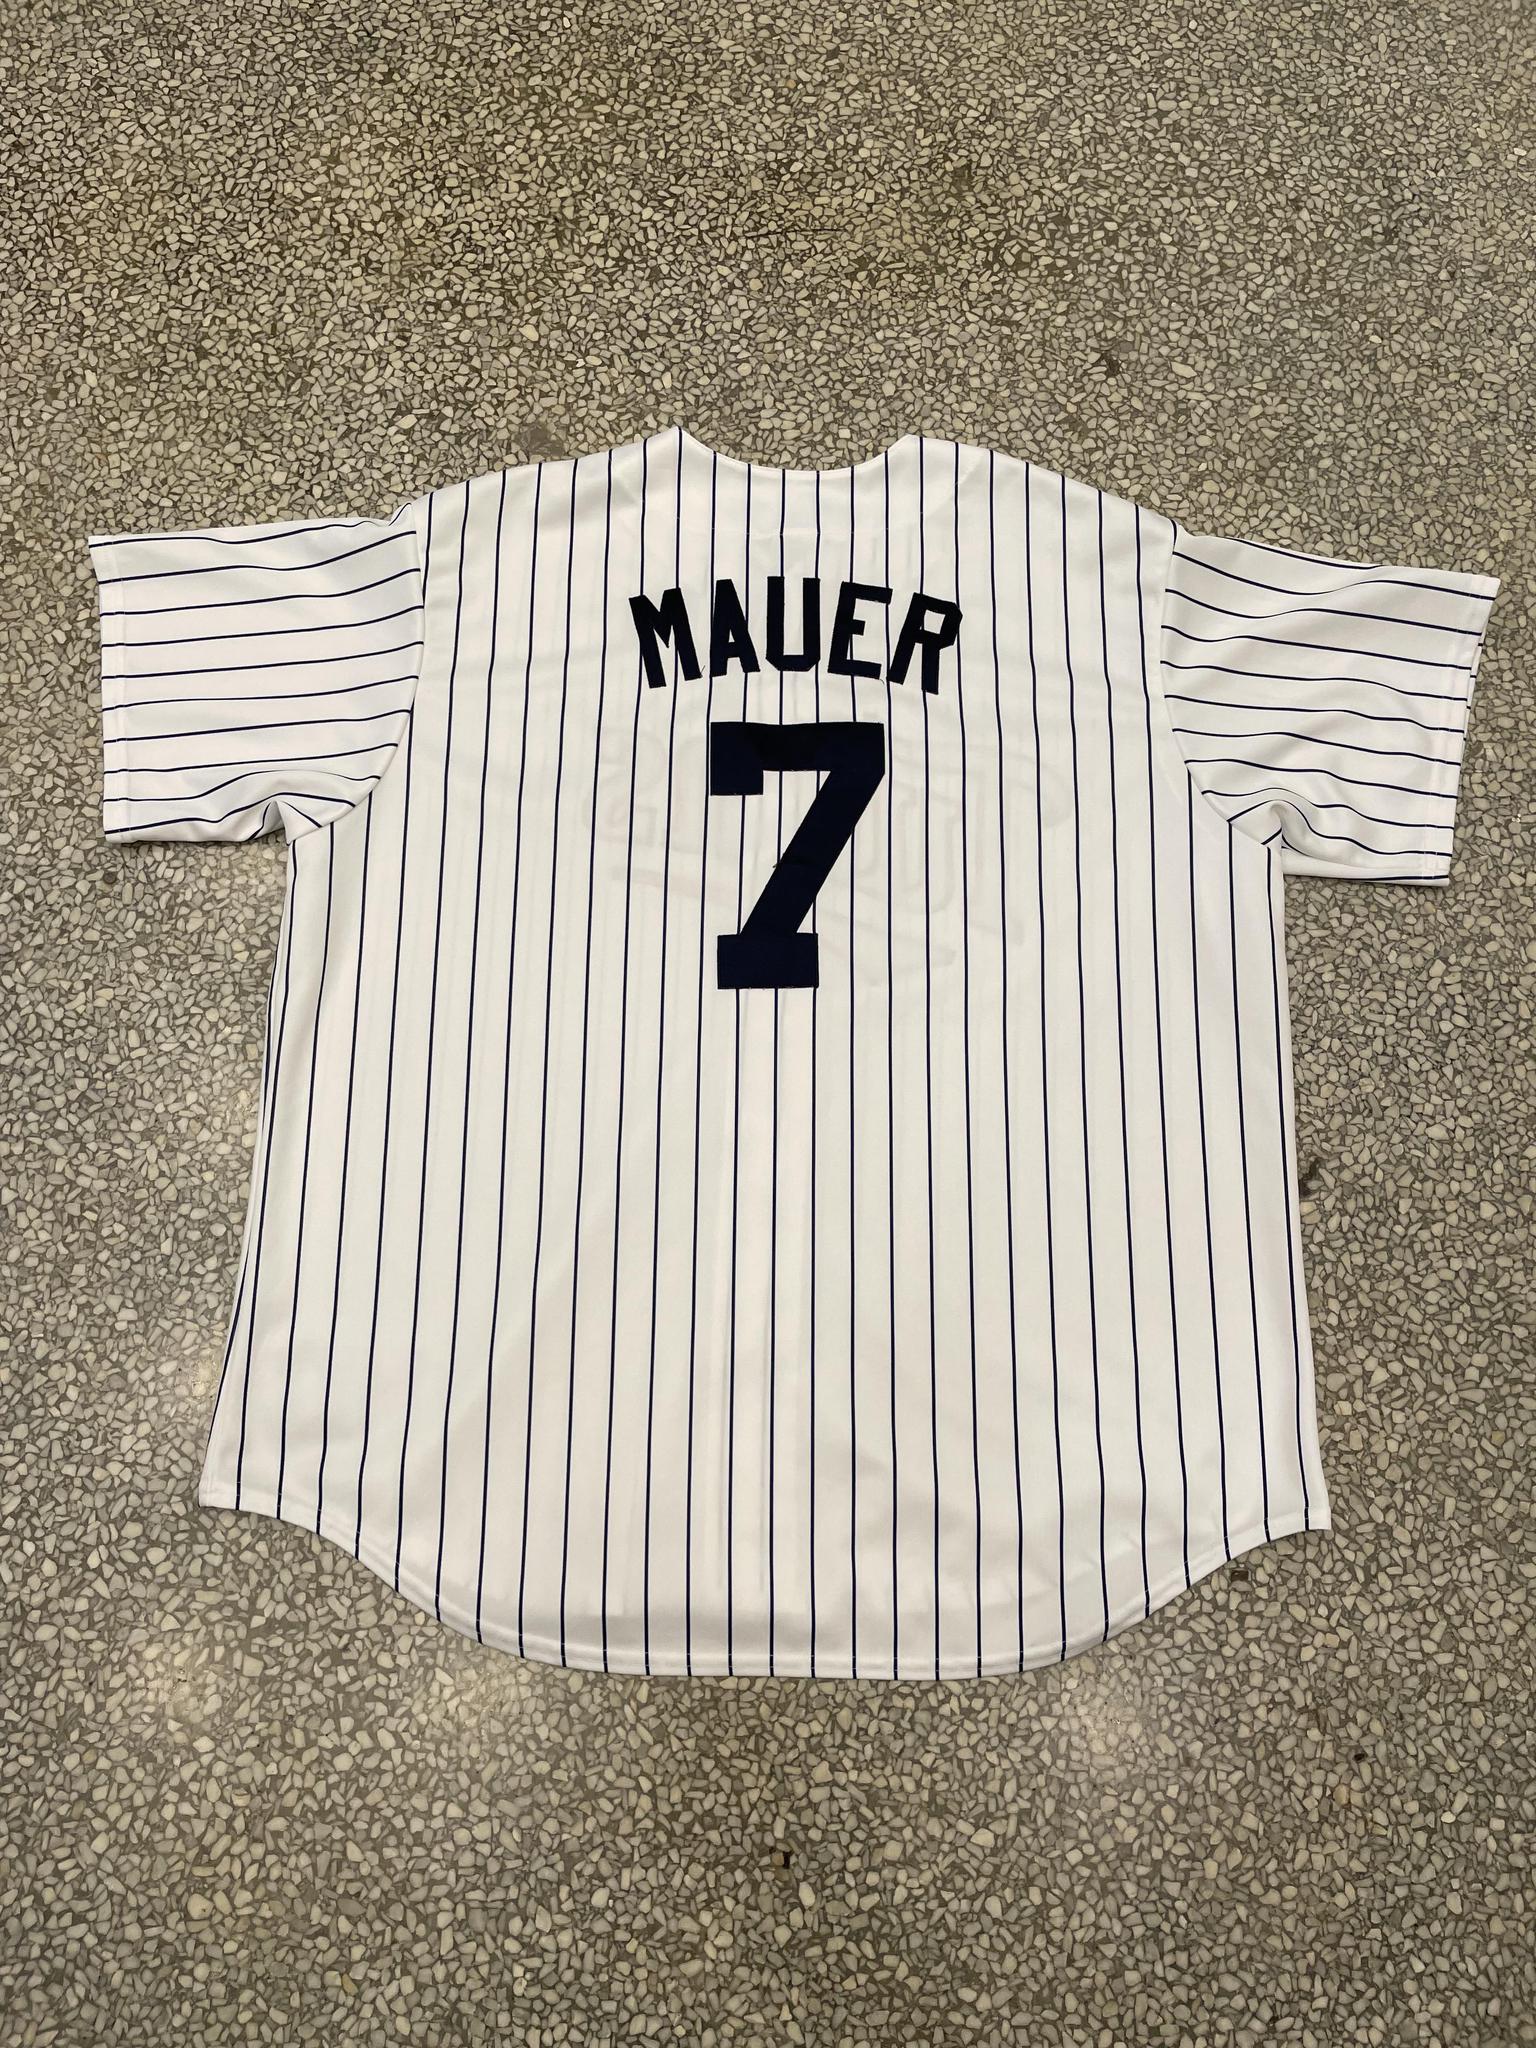 Twins retire No. 7 uniform of Joe Mauer, 'a kid from St. Paul' – Twin Cities